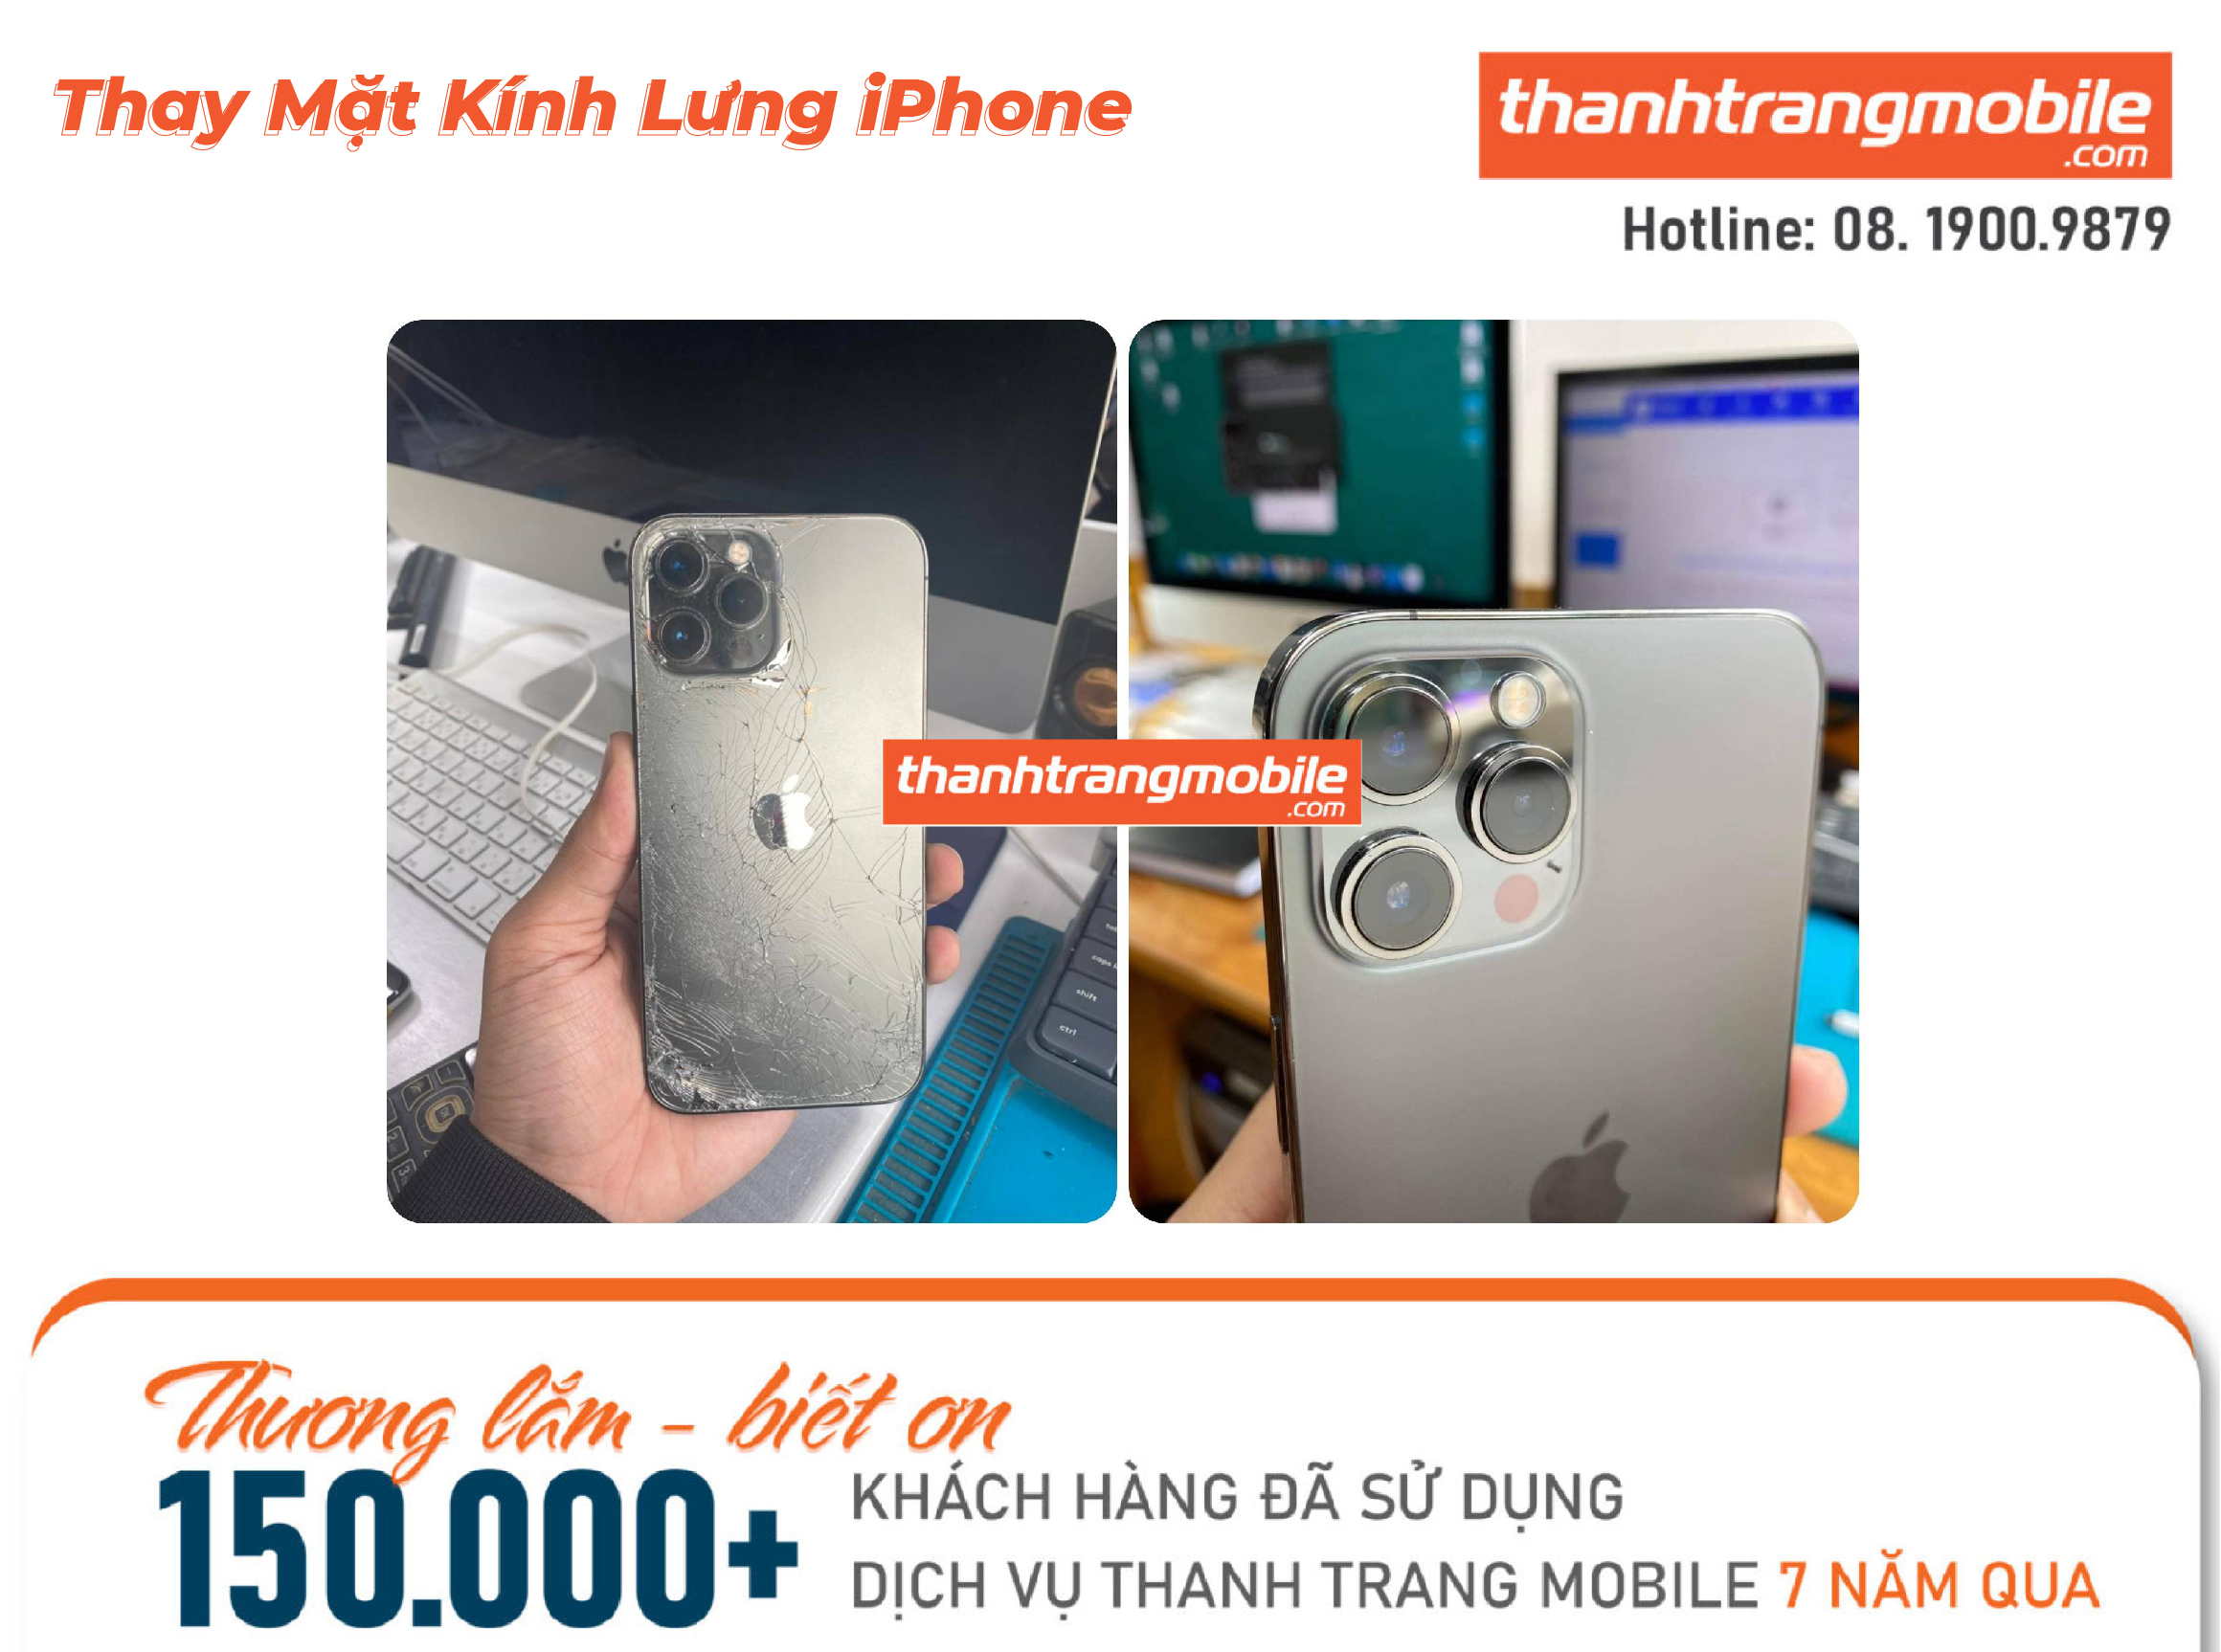 thay-mat-kinh-lung-iphone-thanhtrangmobile_1@4x-100-2 Thay Kính Lưng iPhone 11 Pro Max